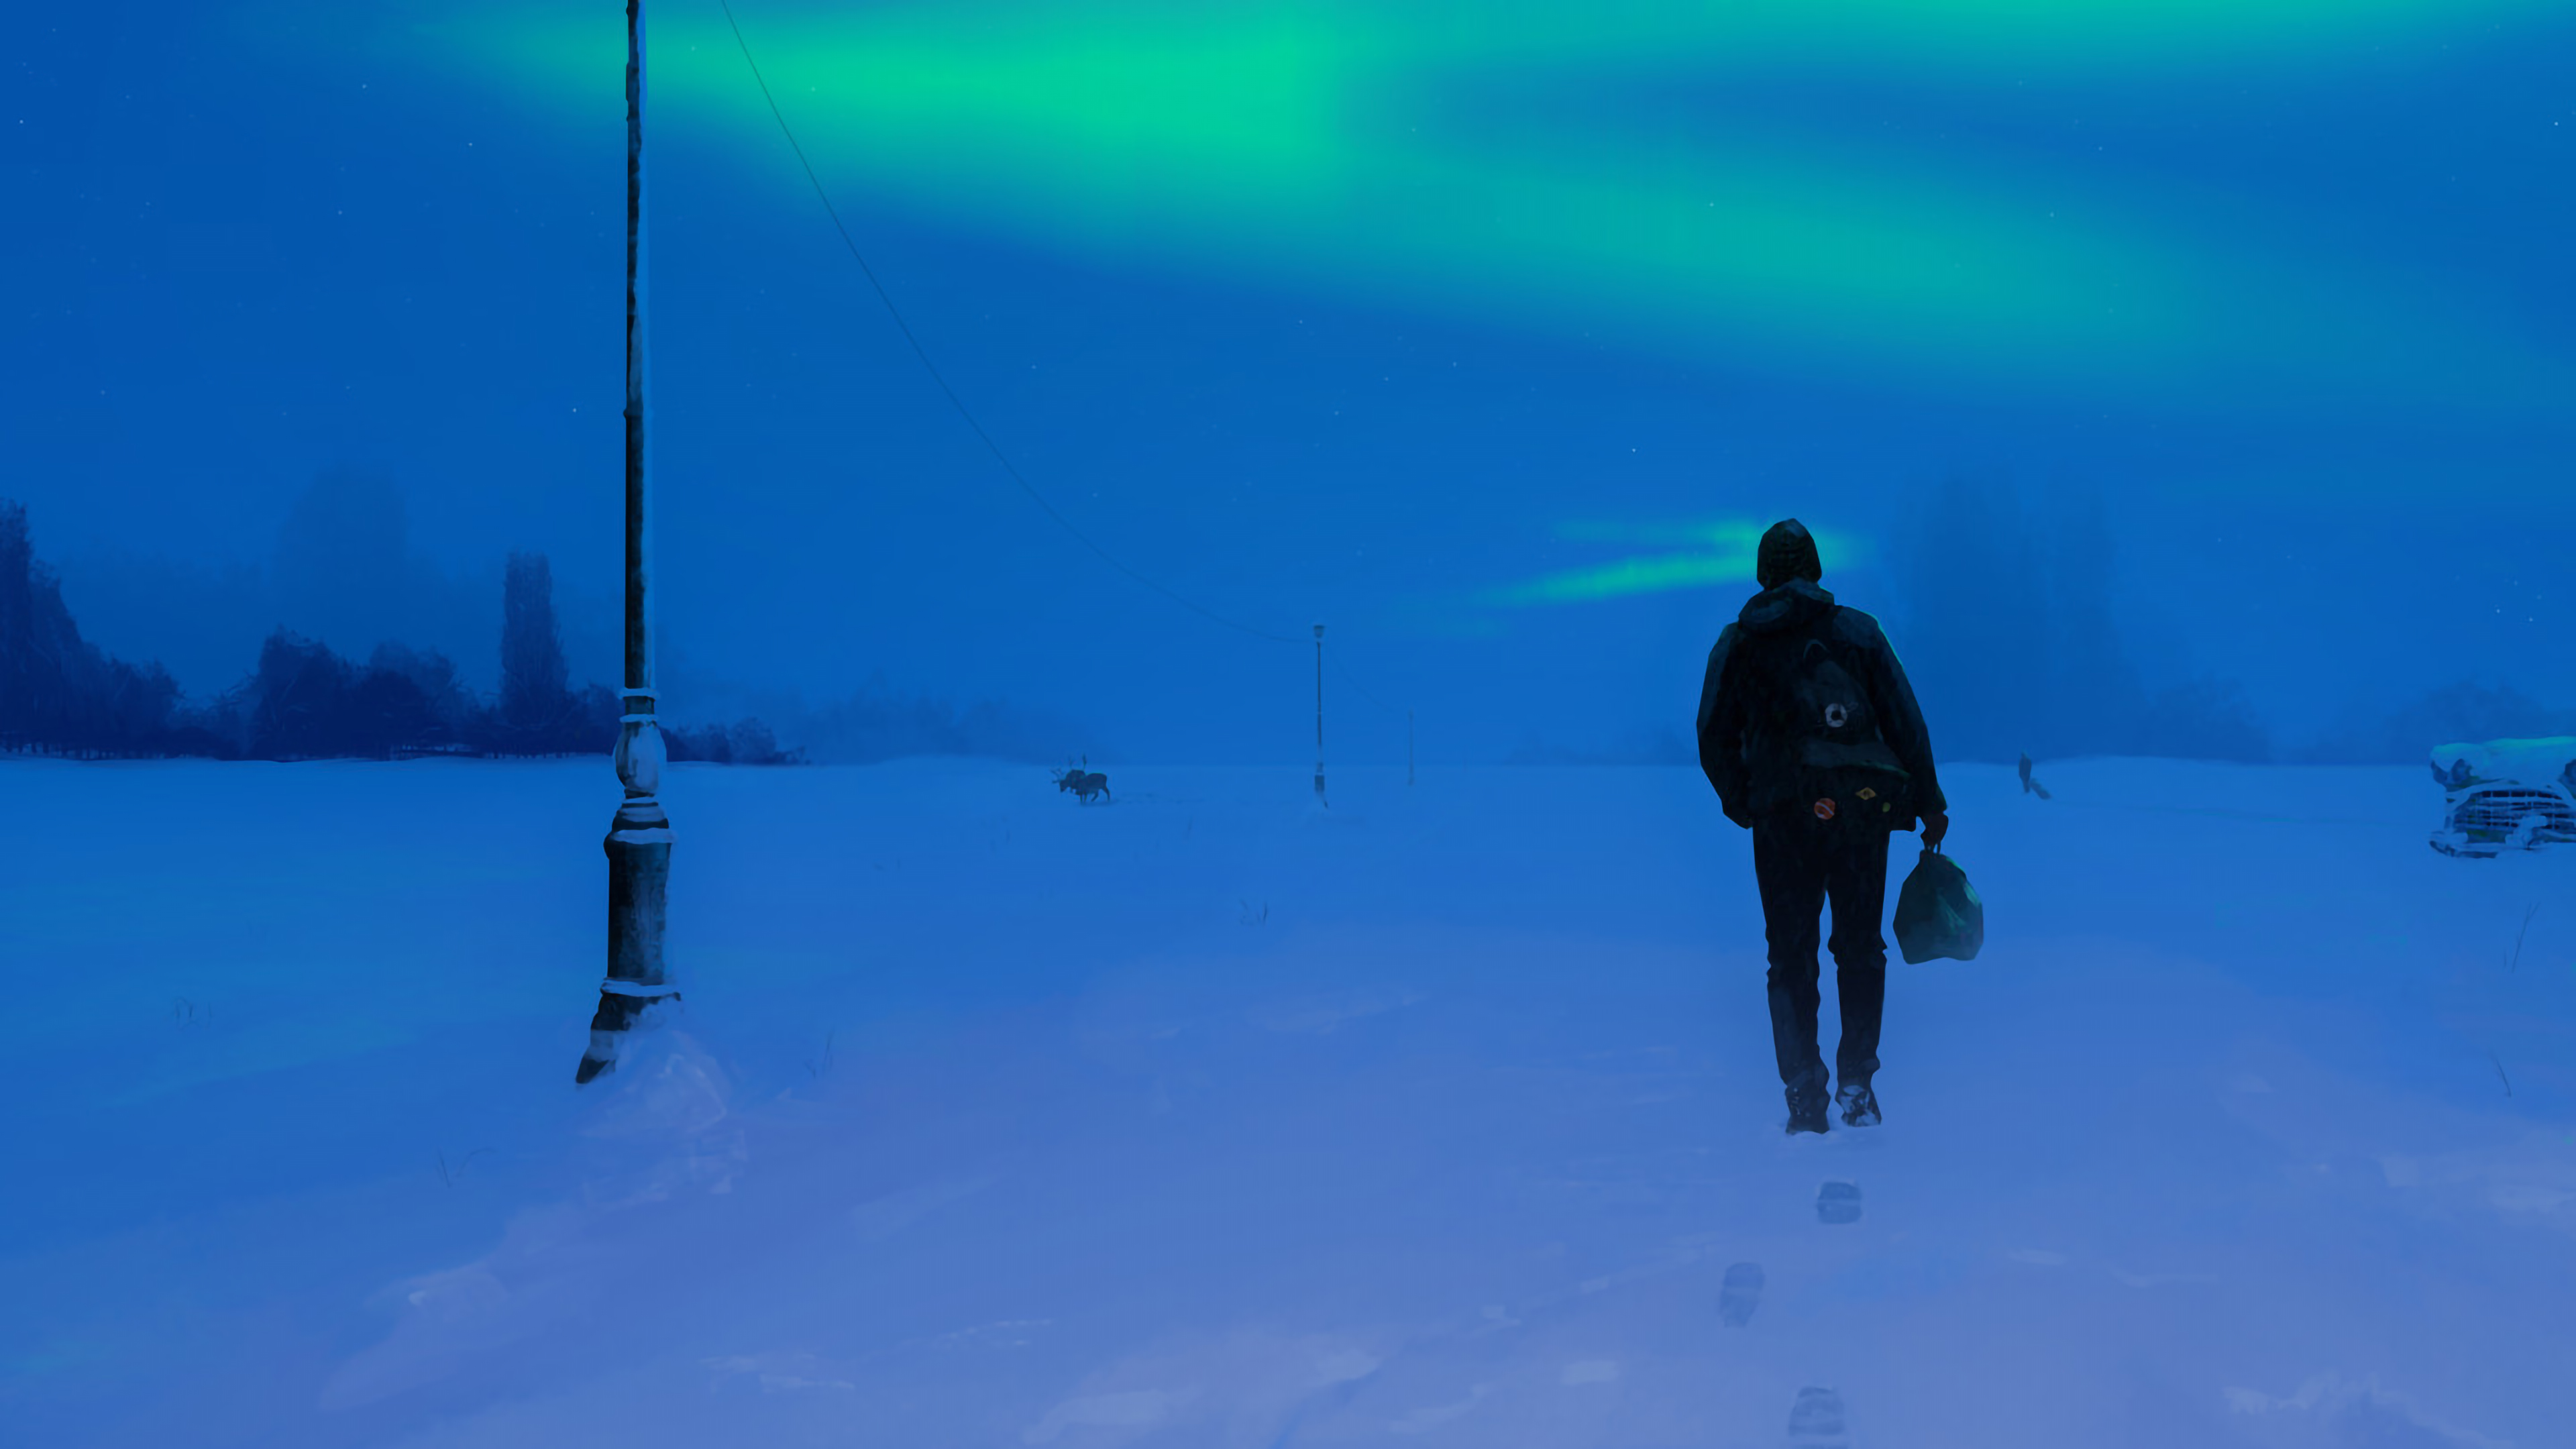 General 3840x2160 aurorae alone snow walking elk light post foot prints winter